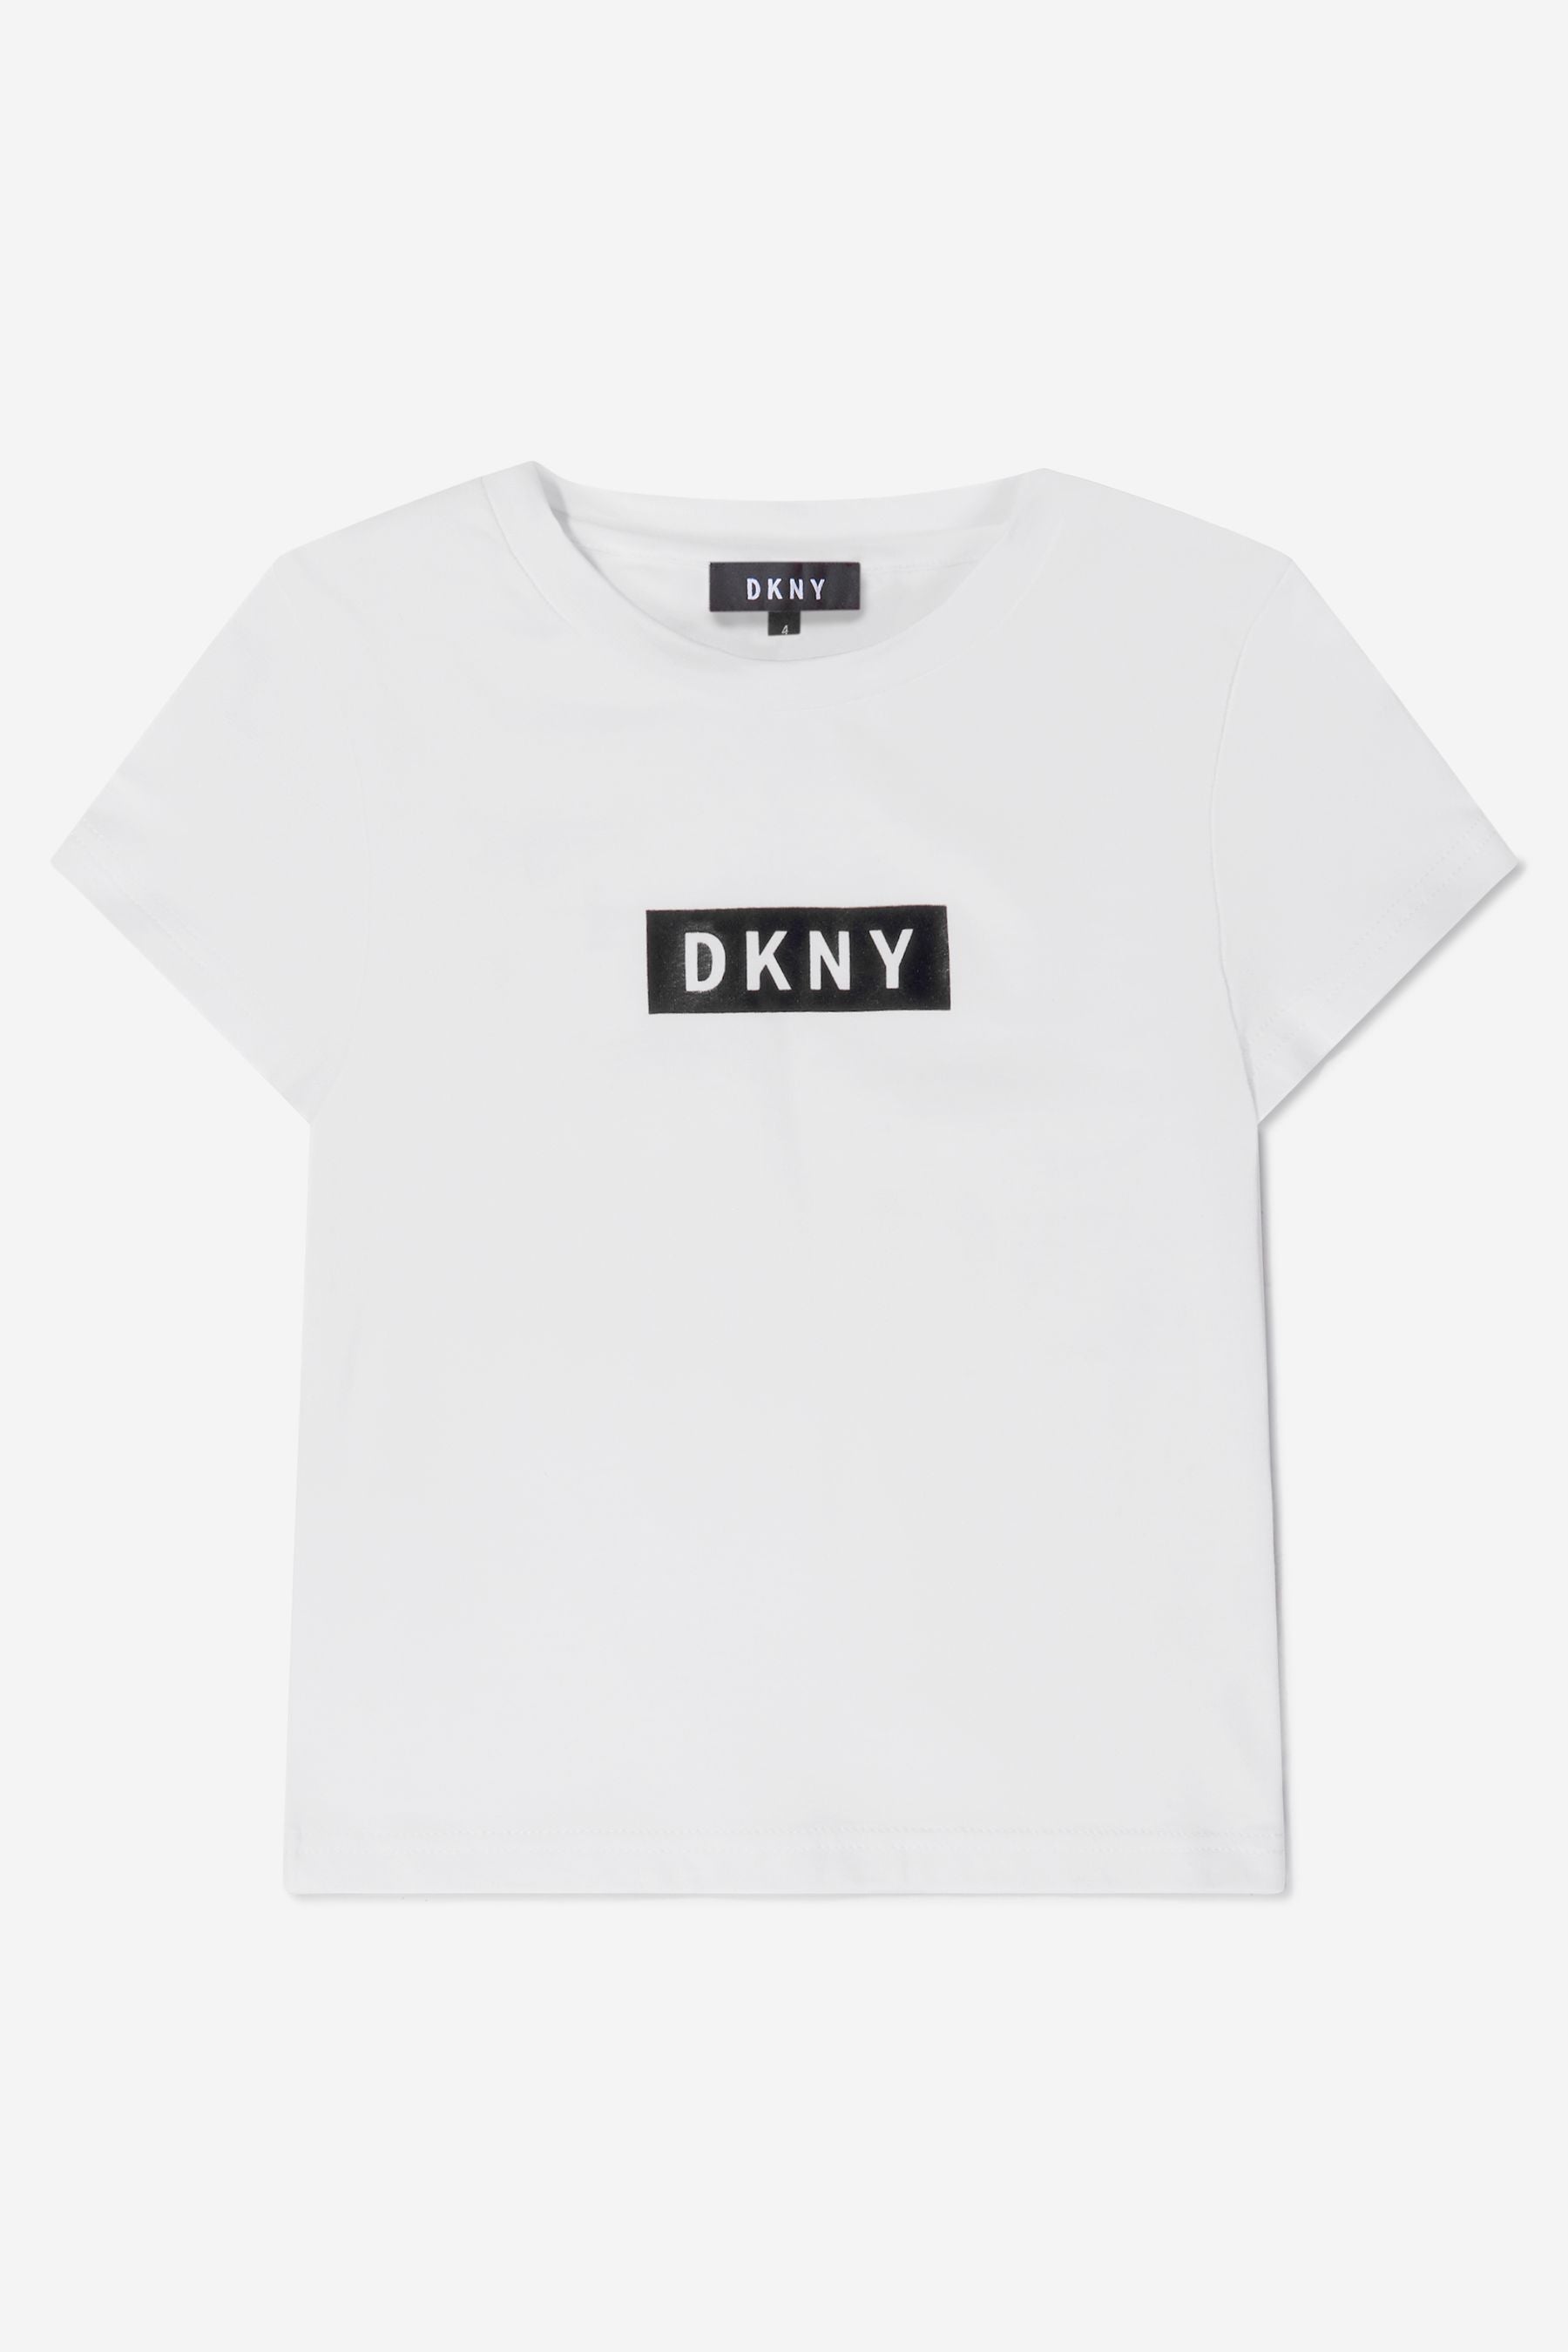 DKNY Women's White T-shirts